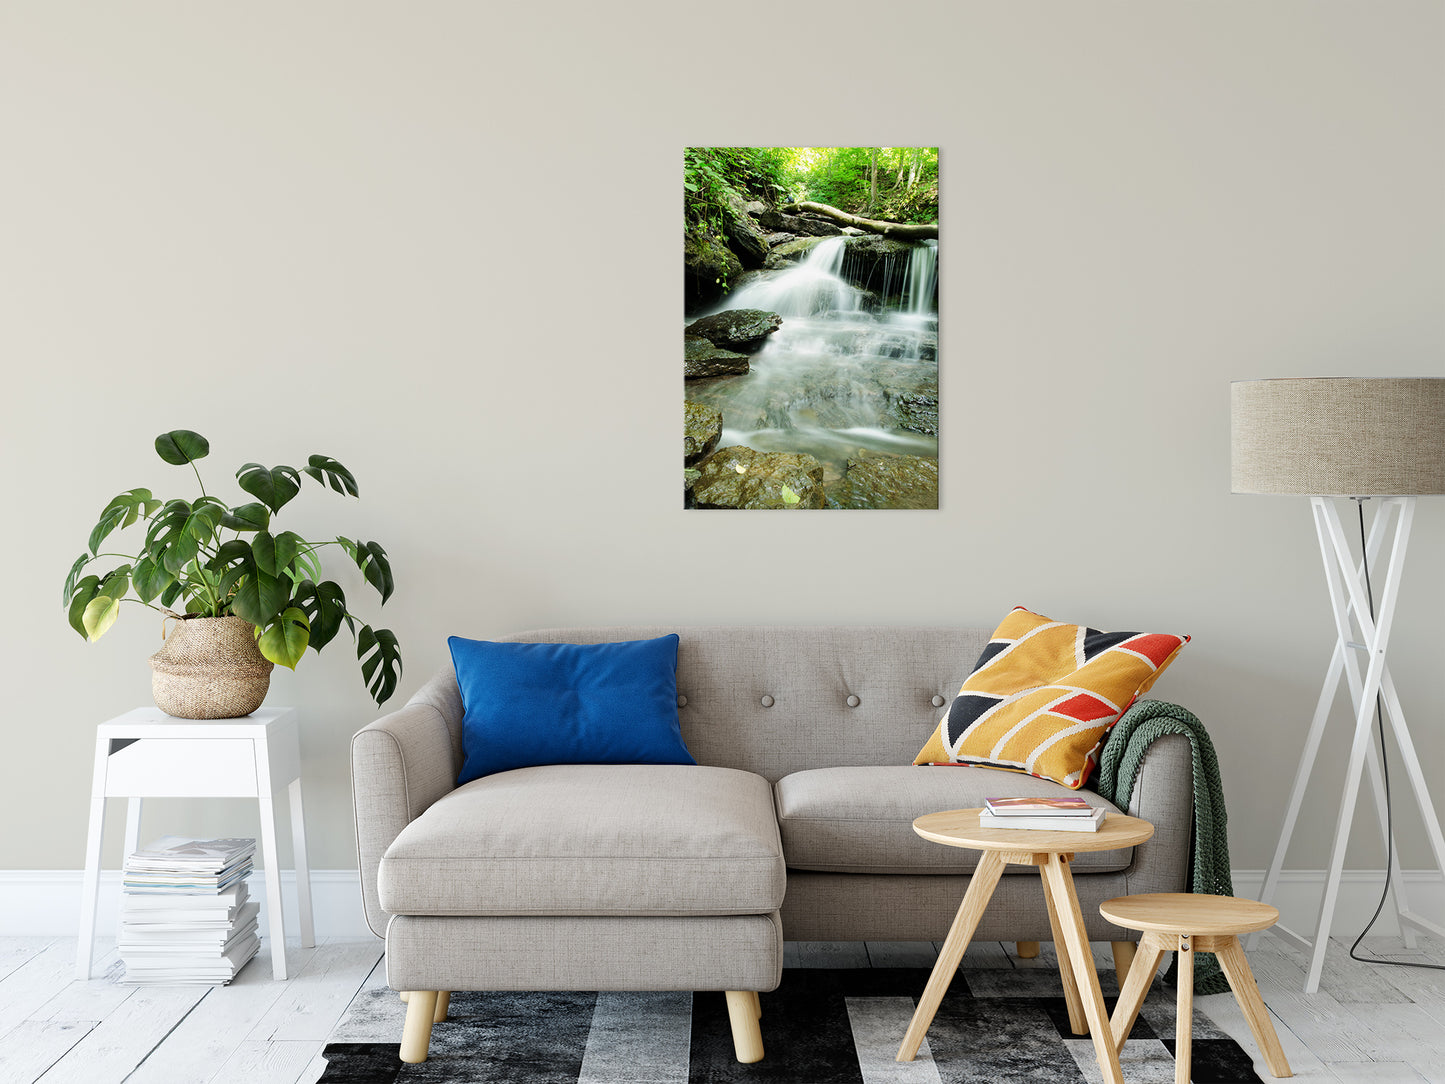 Pixley Waterfall 2 Landscape Photo Fine Art Canvas Wall Art Prints 24" x 36" - PIPAFINEART